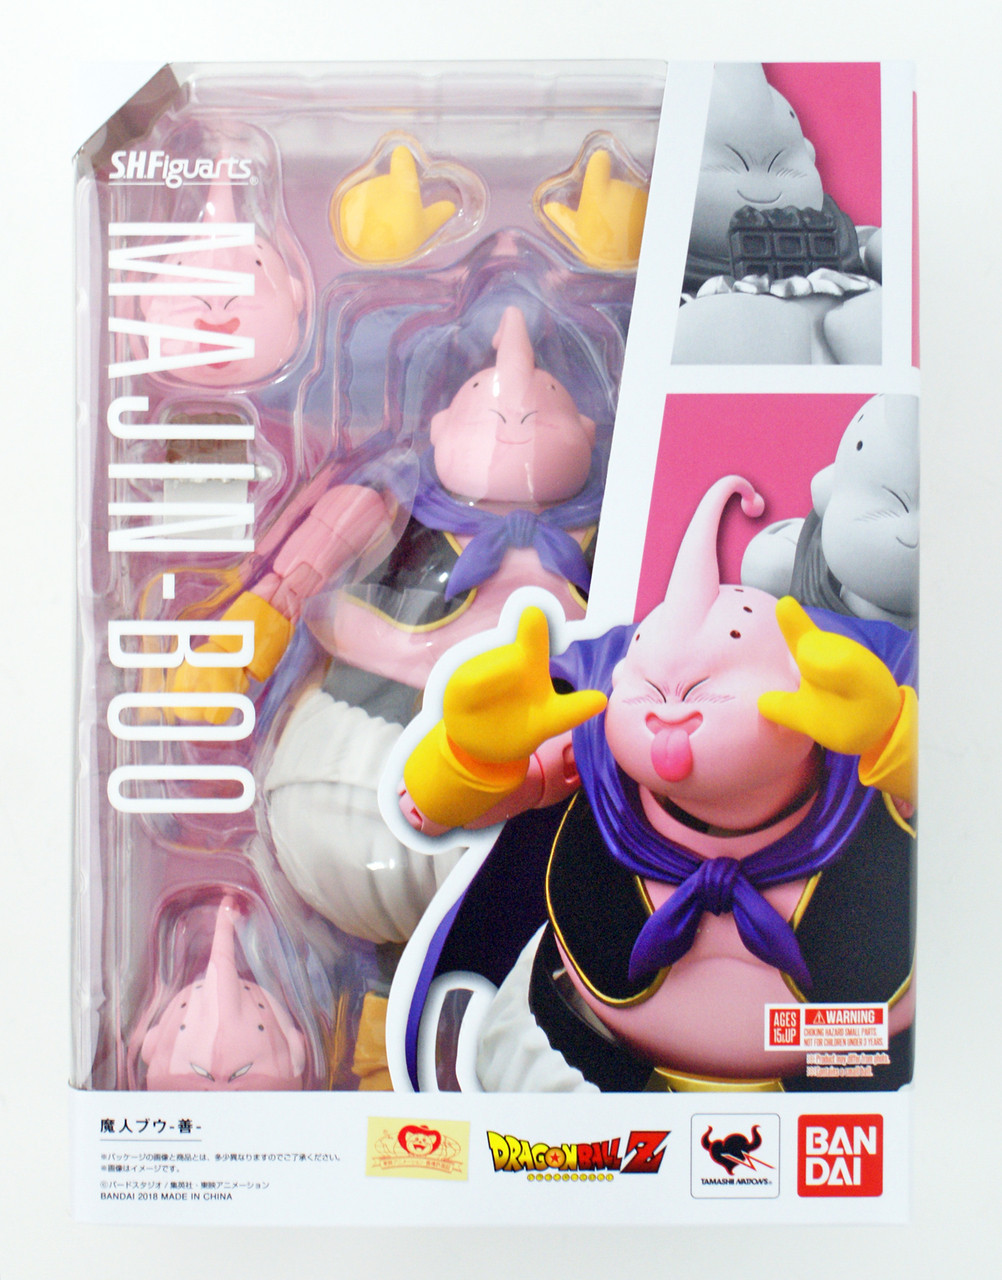 Original Bandai Shfiguarts Dragon Ball Z Majin Buu Fat Excluslve Edition  Action Figure Anime Model Collectible Toys - Action Figures - AliExpress